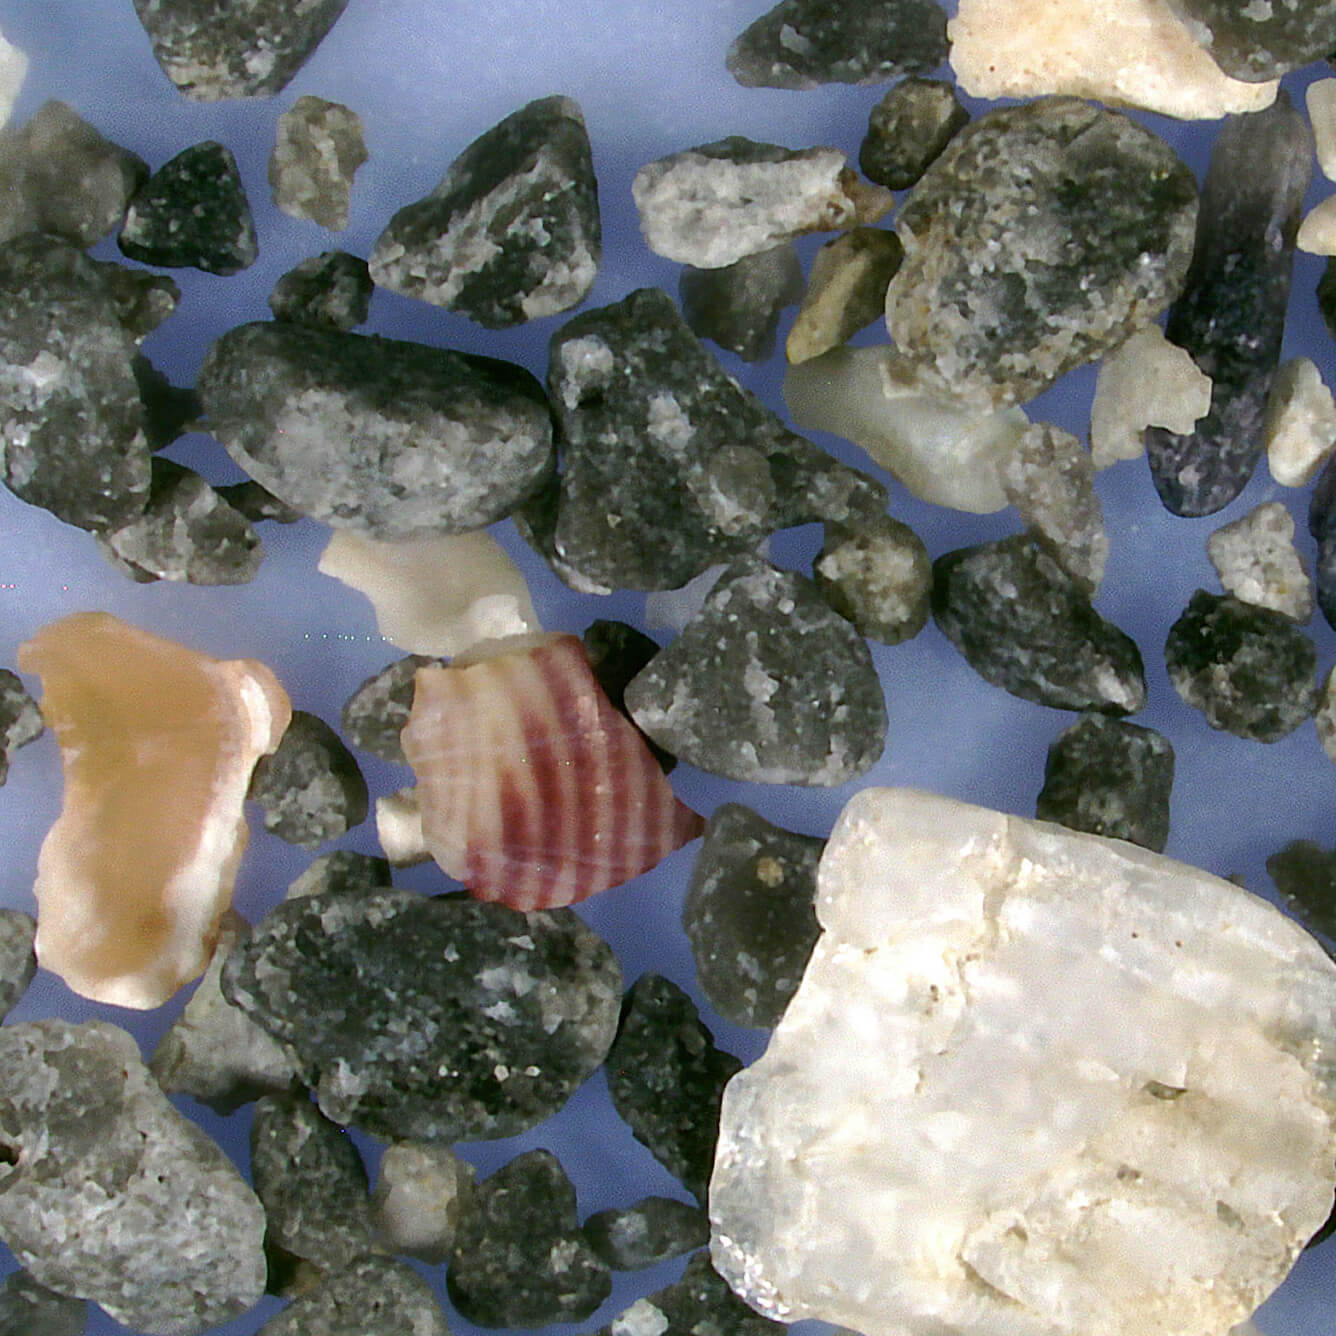 Sq2 7847 Lamphouse Ramp Inishmore Aran Islands Ireland Sand Grains Magnified Under Microscope 1 Copy